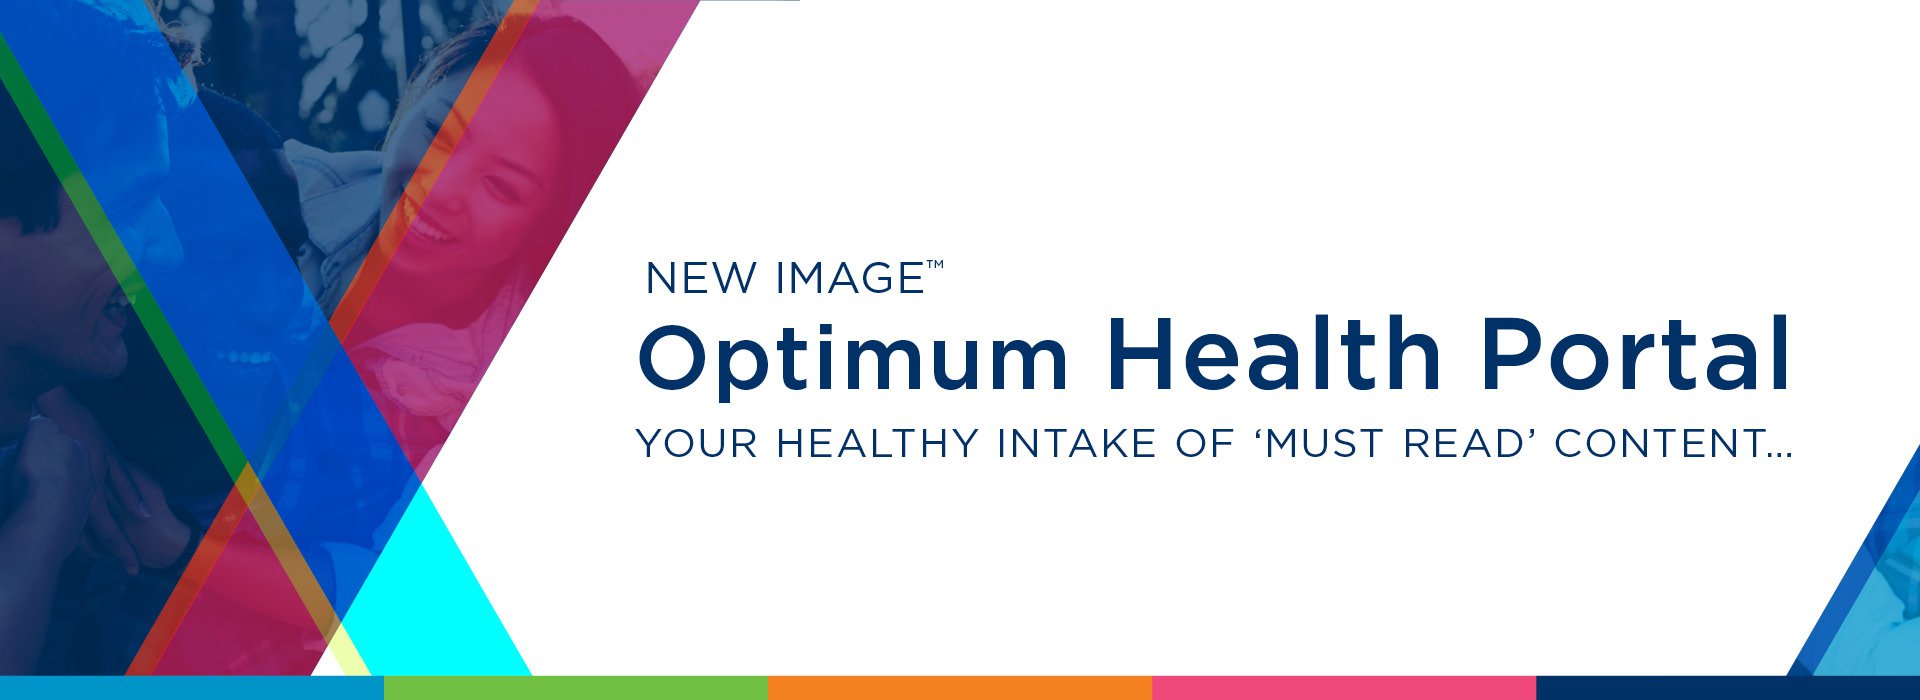 New Image International: Optimum Health Portal